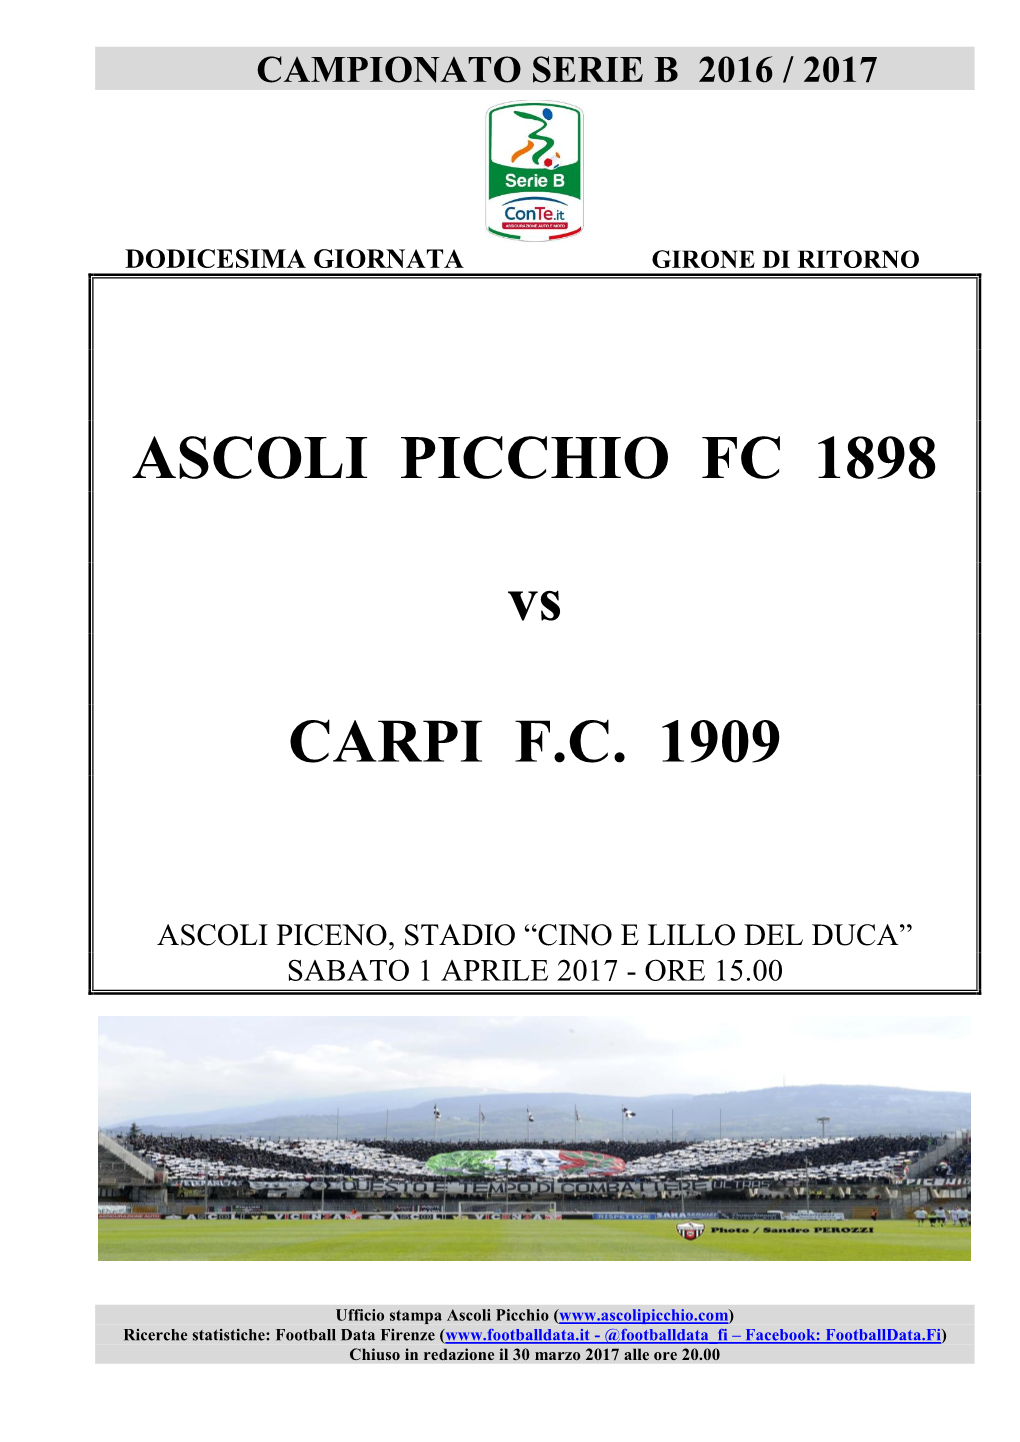 ASCOLI PICCHIO FC 1898 Vs CARPI F.C. 1909